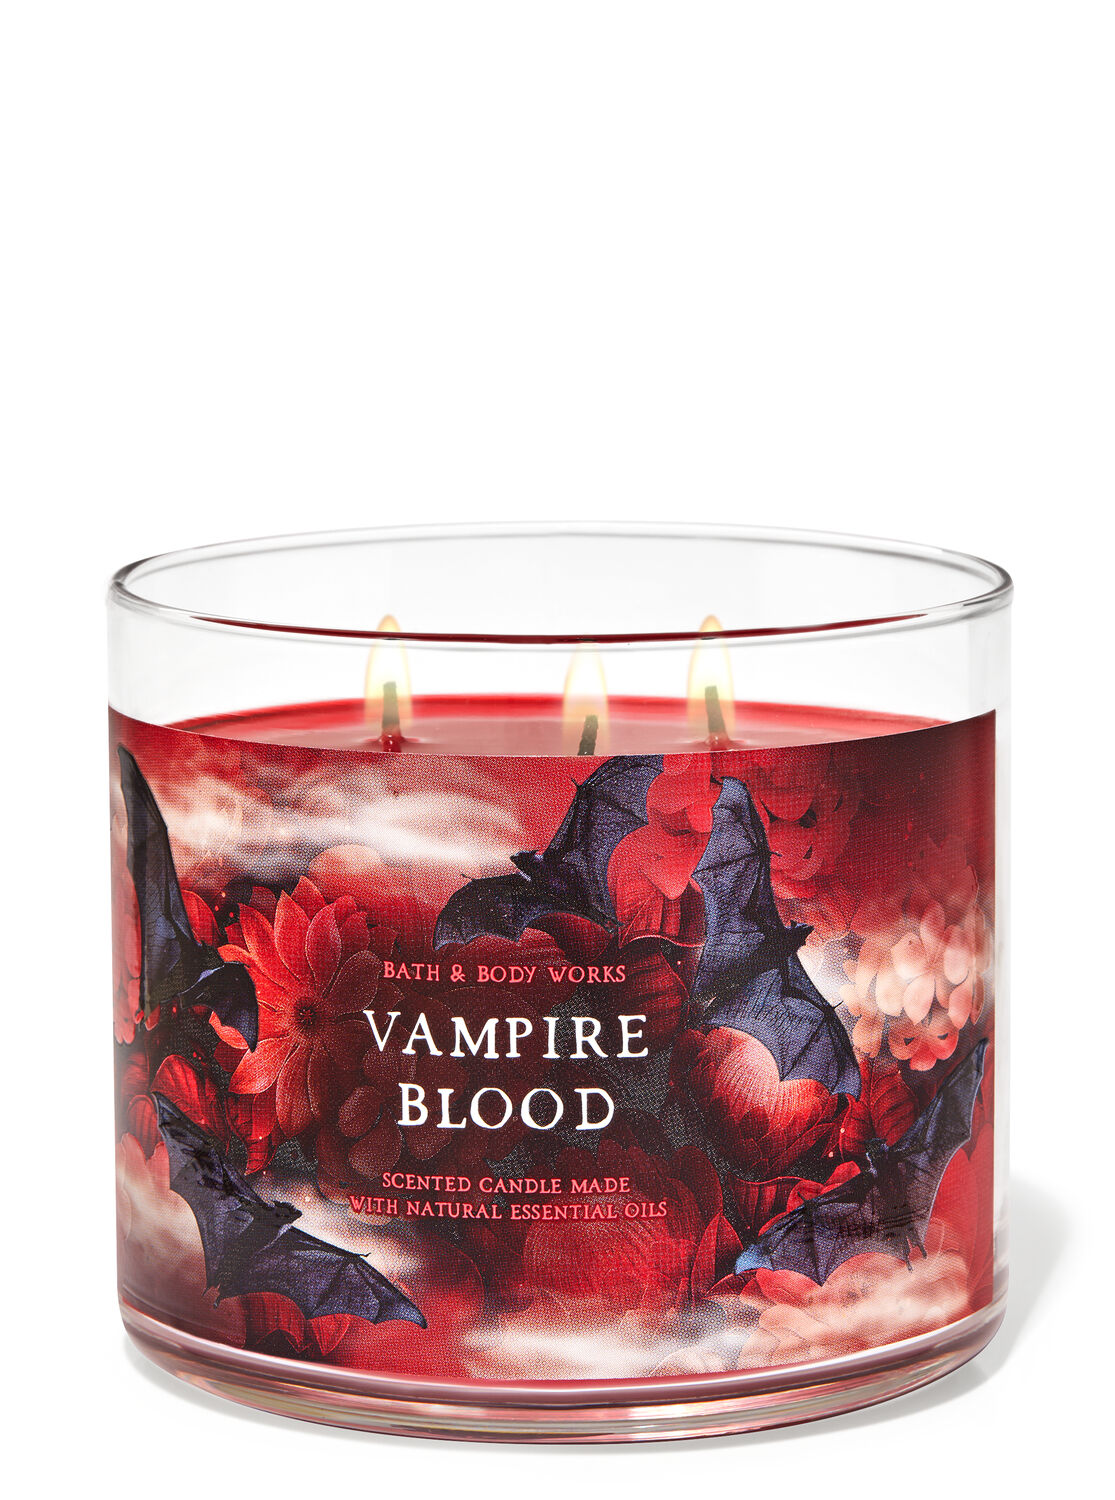 VAMPIRE BLOOD  3 wick candle US STOCK 411g Bath & Body Works HALLOWEEN 2020 